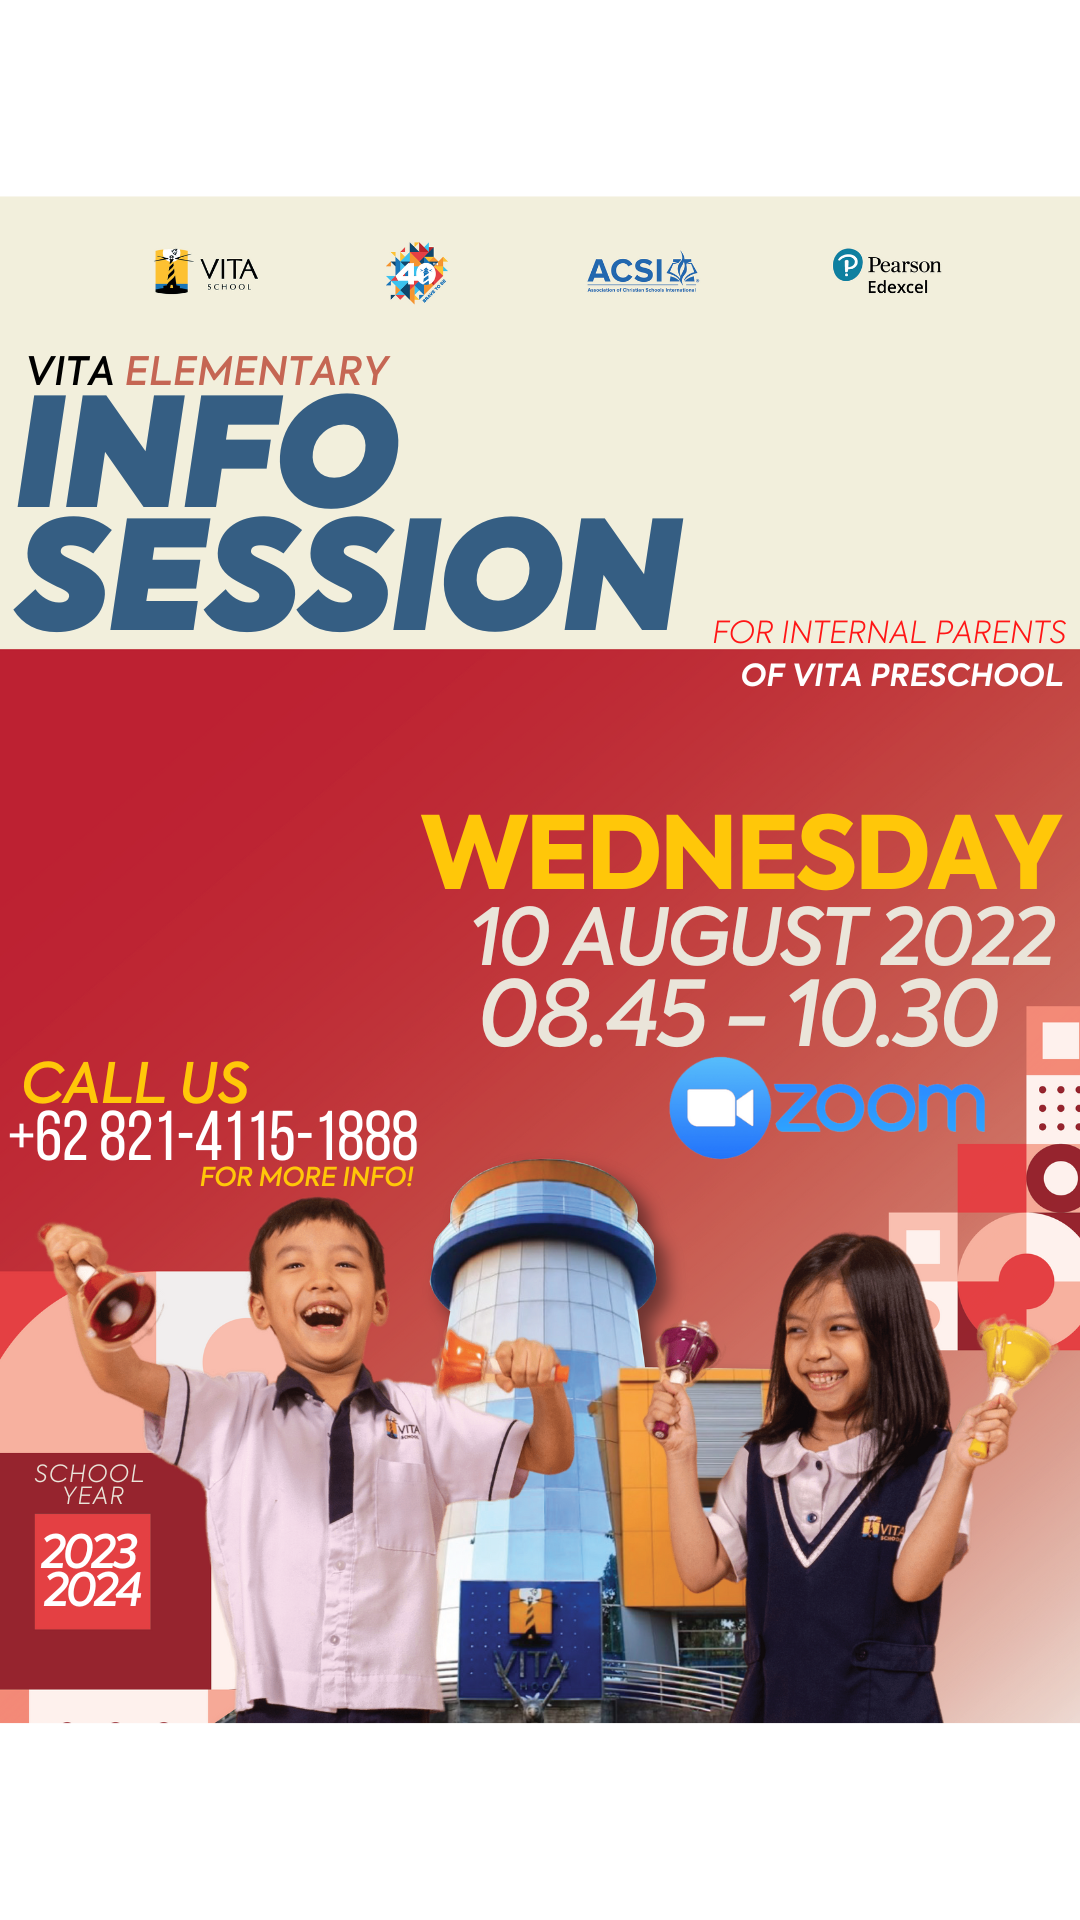 VITA Elementary Info Session (For Internal Parents of VITA Preschool)